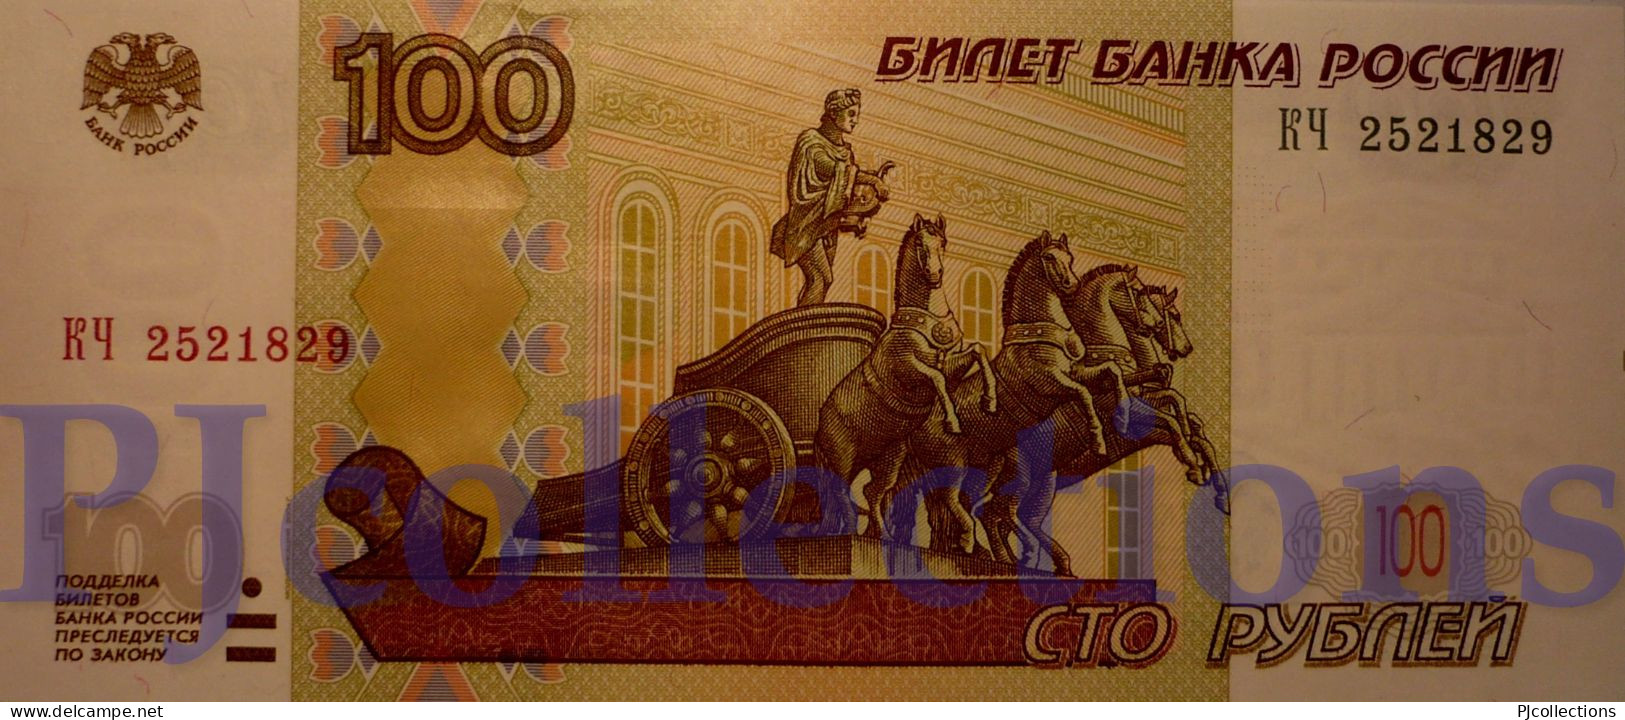 RUSSIA 100 RUBLES 1997 PICK 270a UNC - Russie